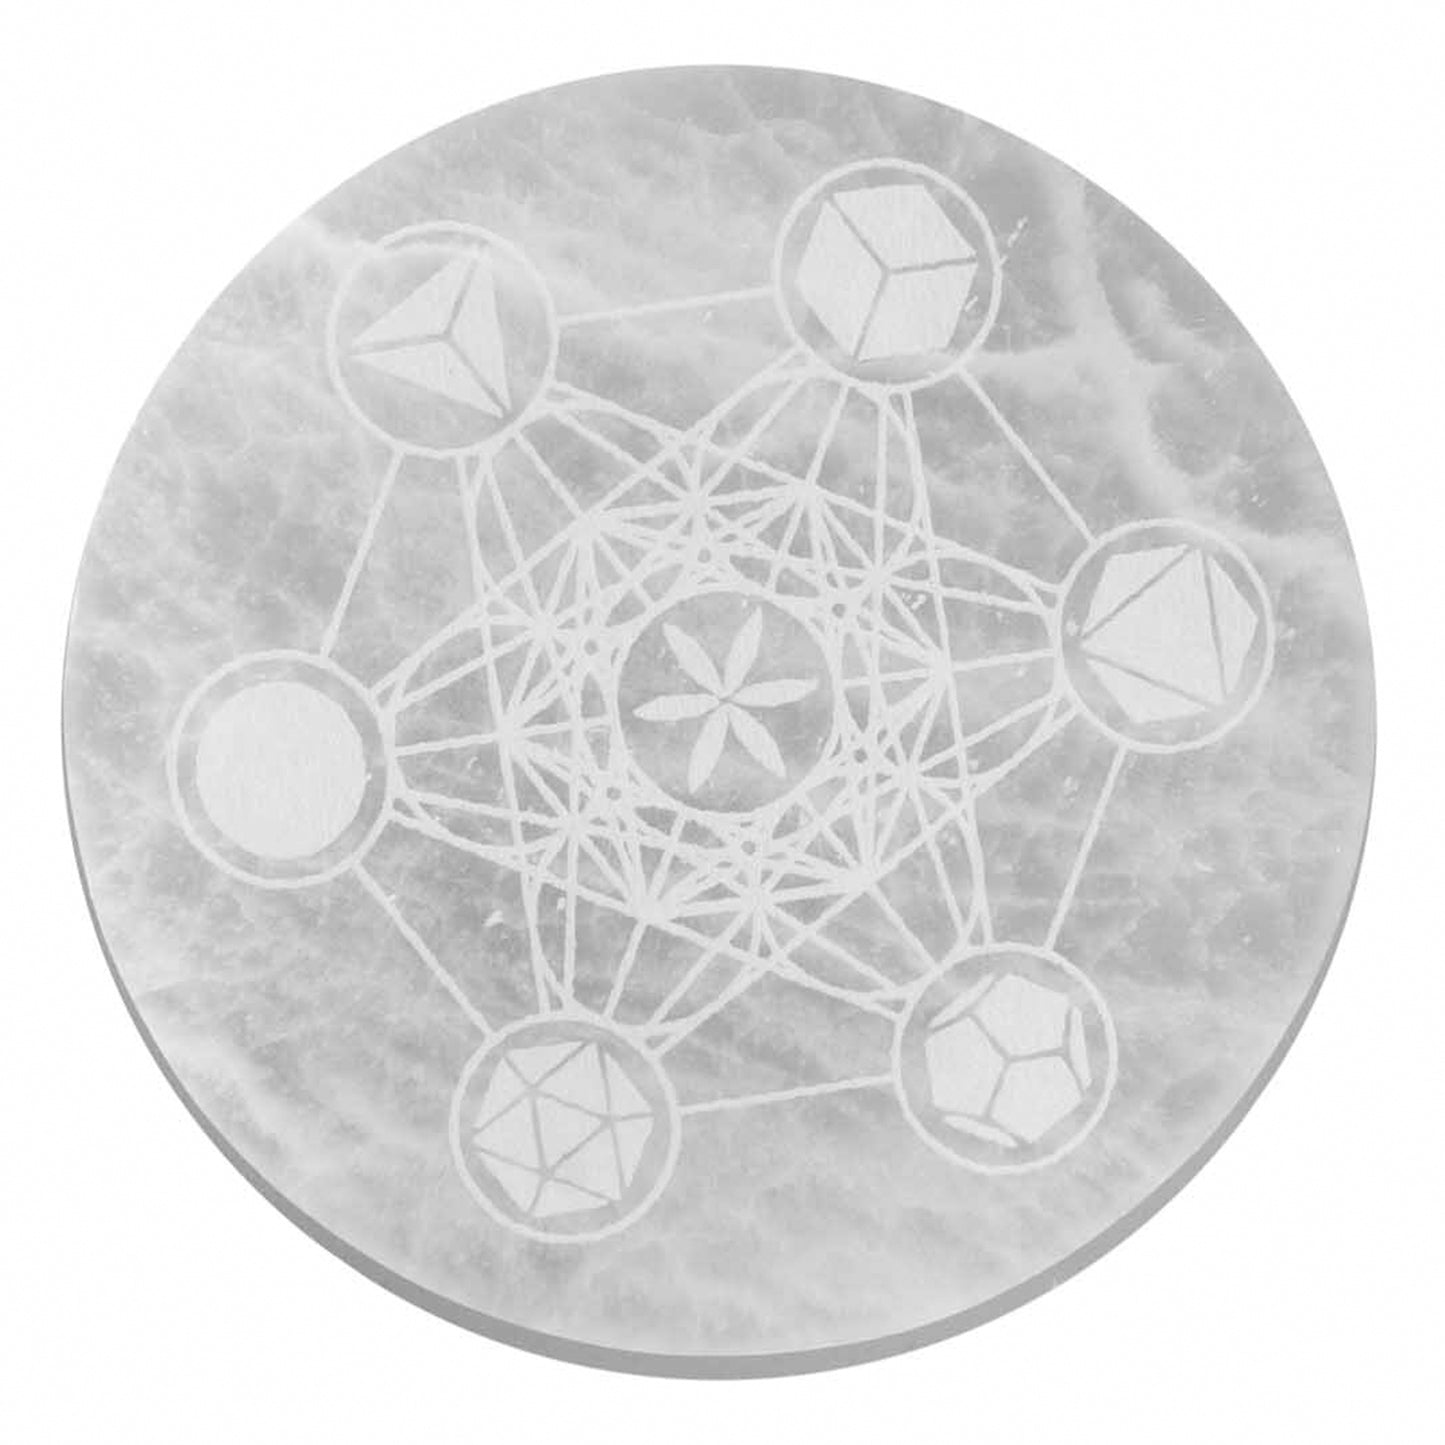 Large Charging Plate 18cm - Sacred Geometry (Metatron's Cube)